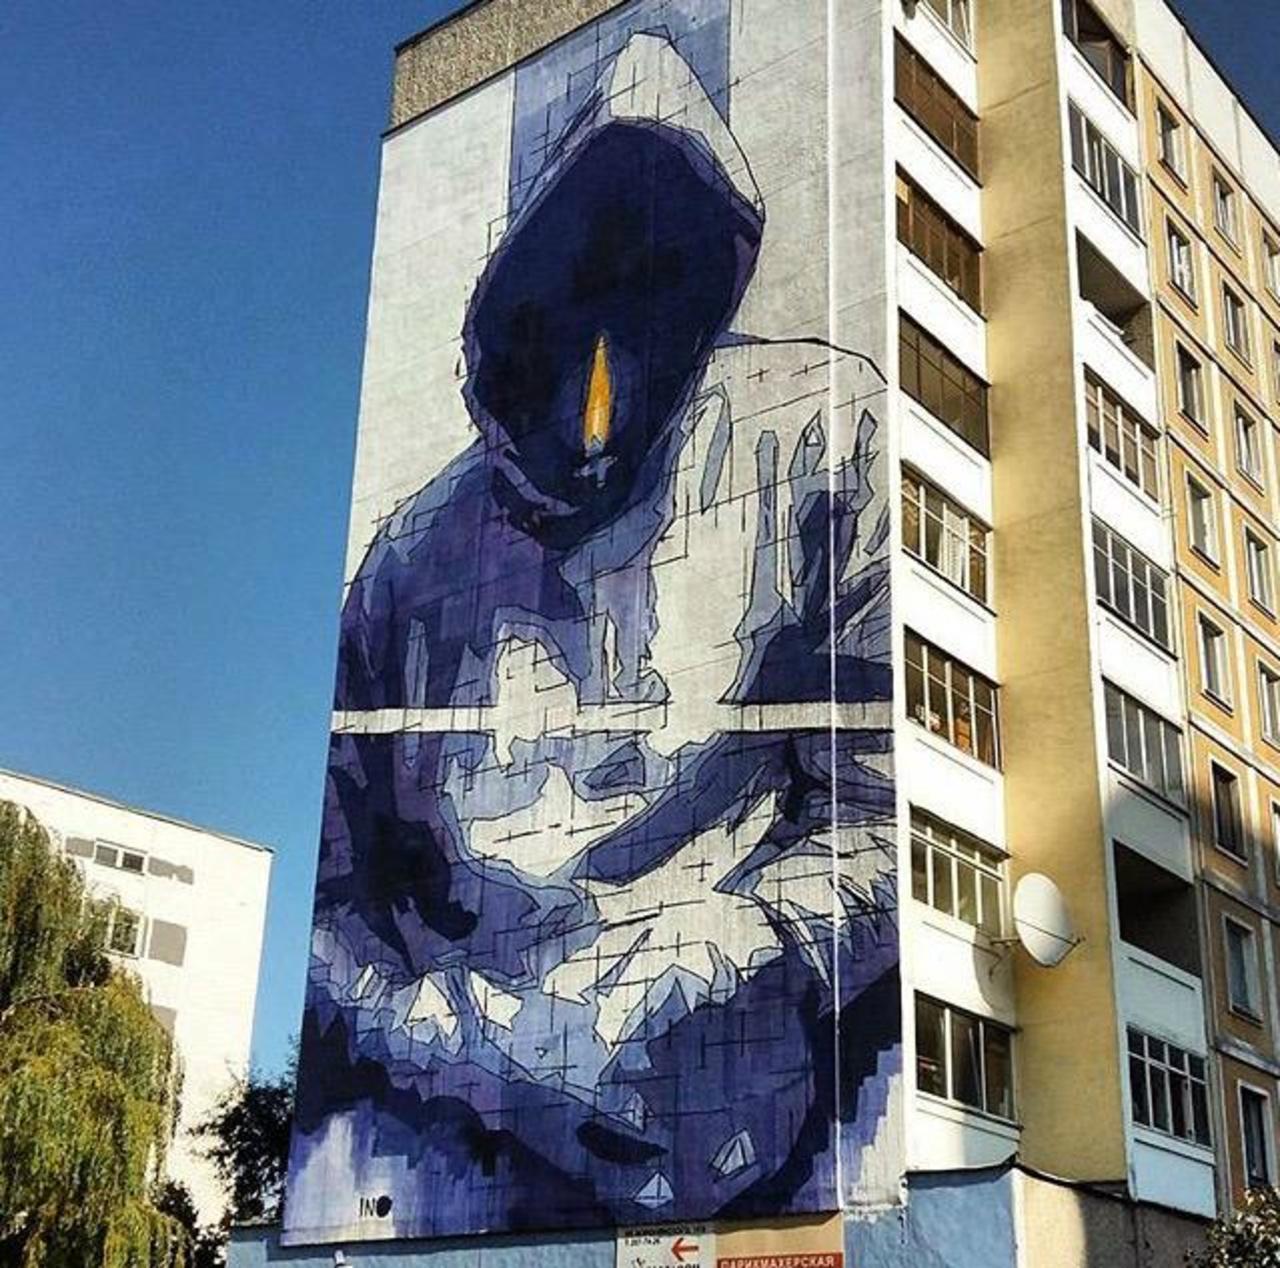 'Man With No Name' 
New Street Art by iNO in Minsk, Belarus 

#art #graffiti #mural #streetart http://t.co/kh7QS6WUfQ